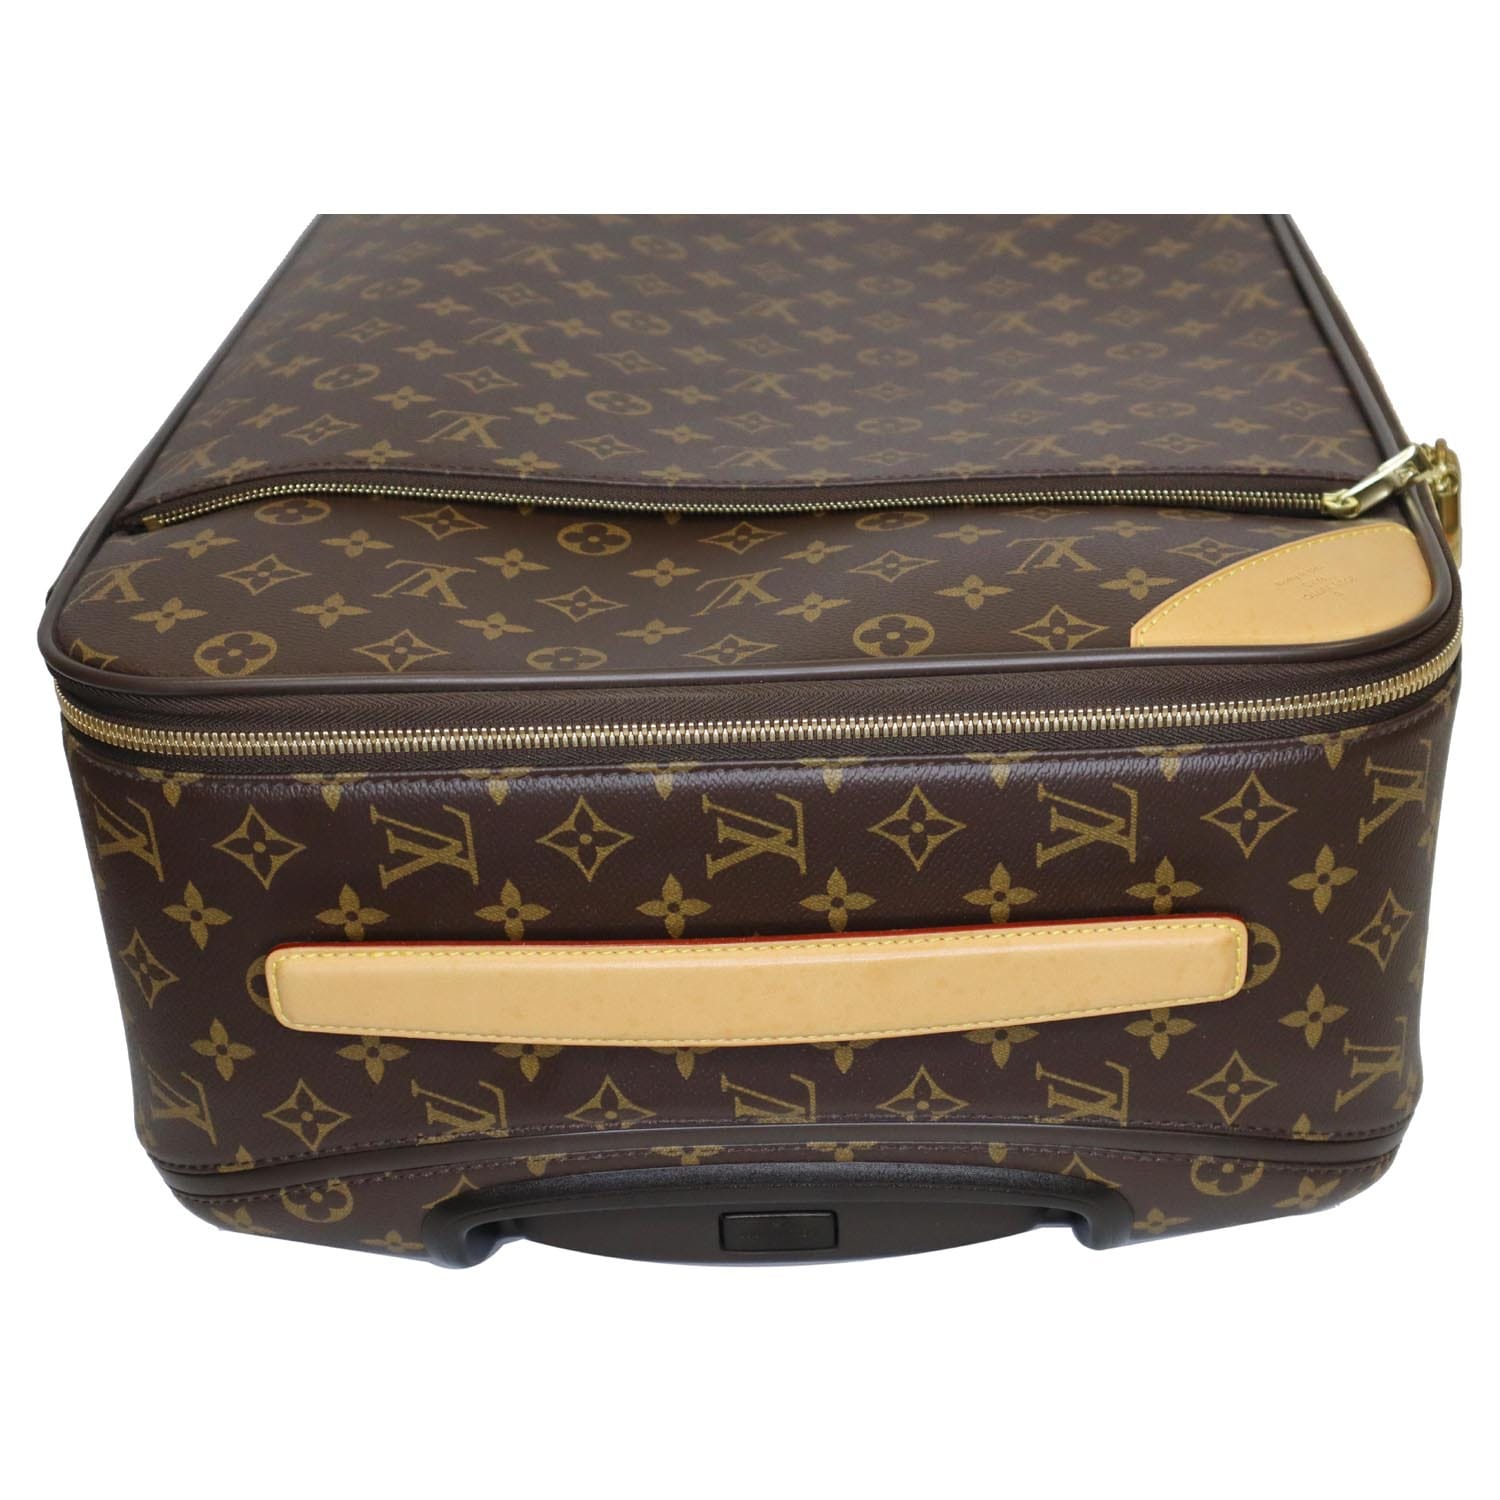 Vintage Louis Vuitton Pegase 55 Travel Suitcase Trolley